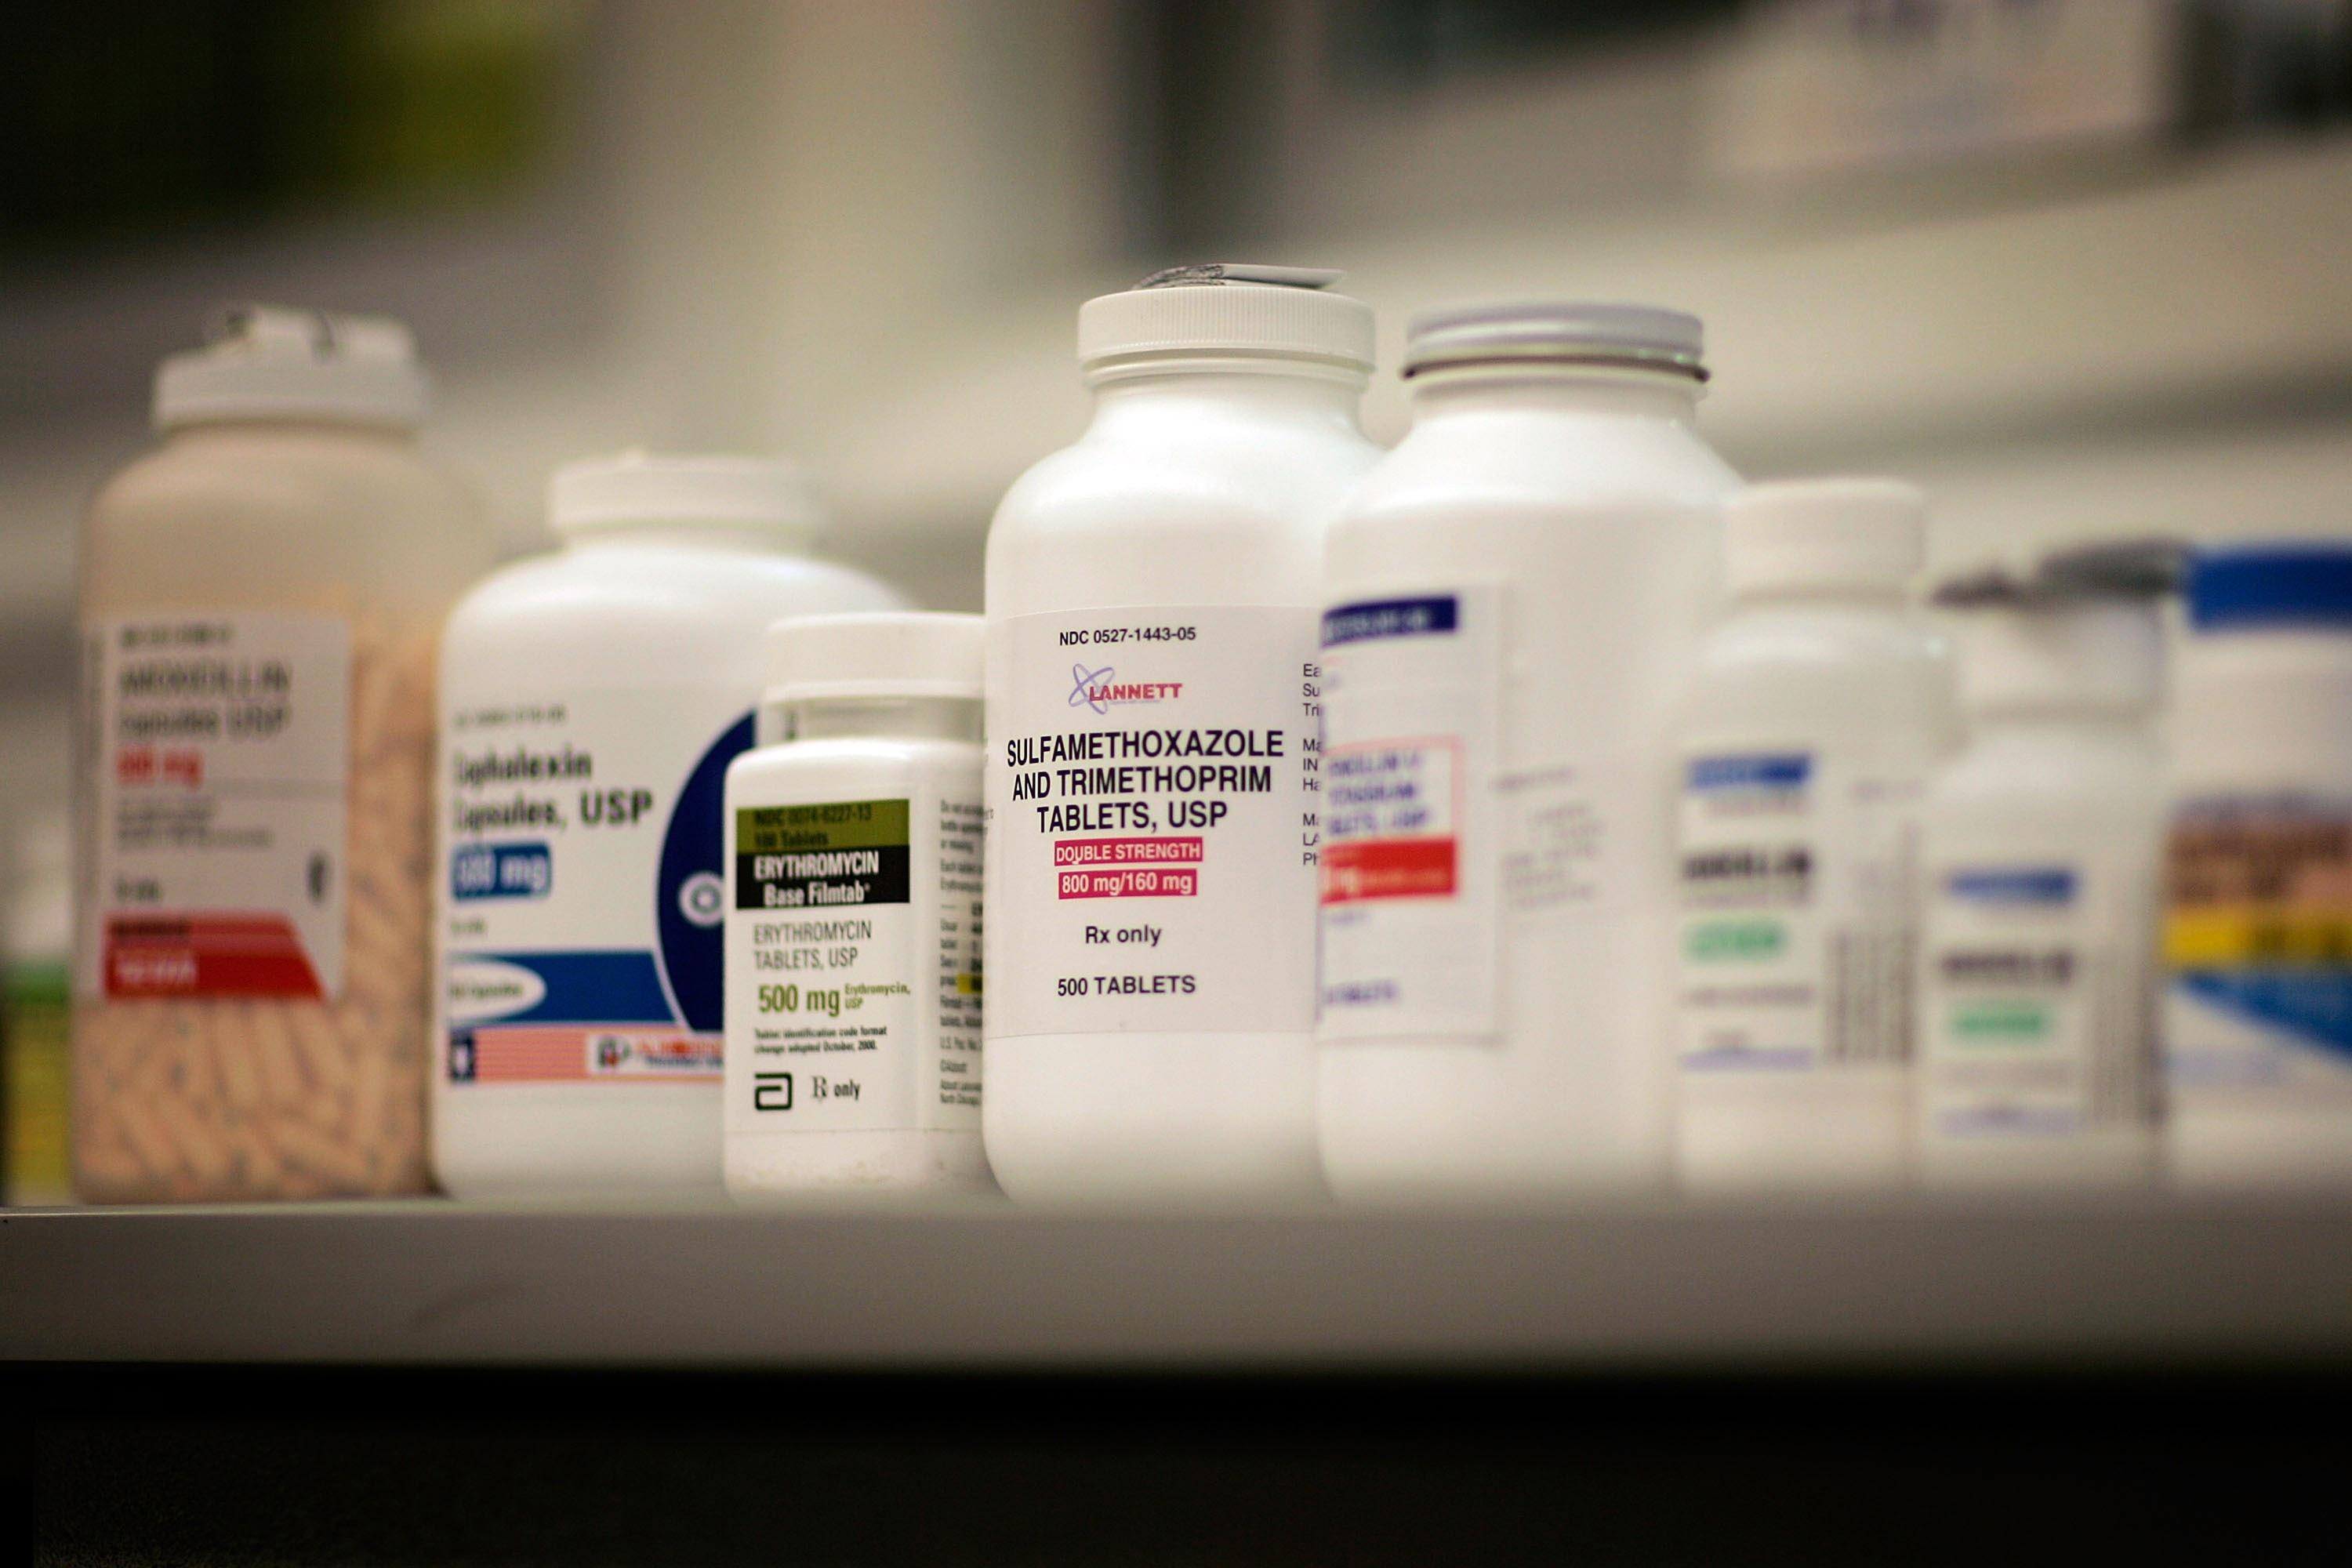 Bottles of medication at a pharmacy. (CBS News photo)